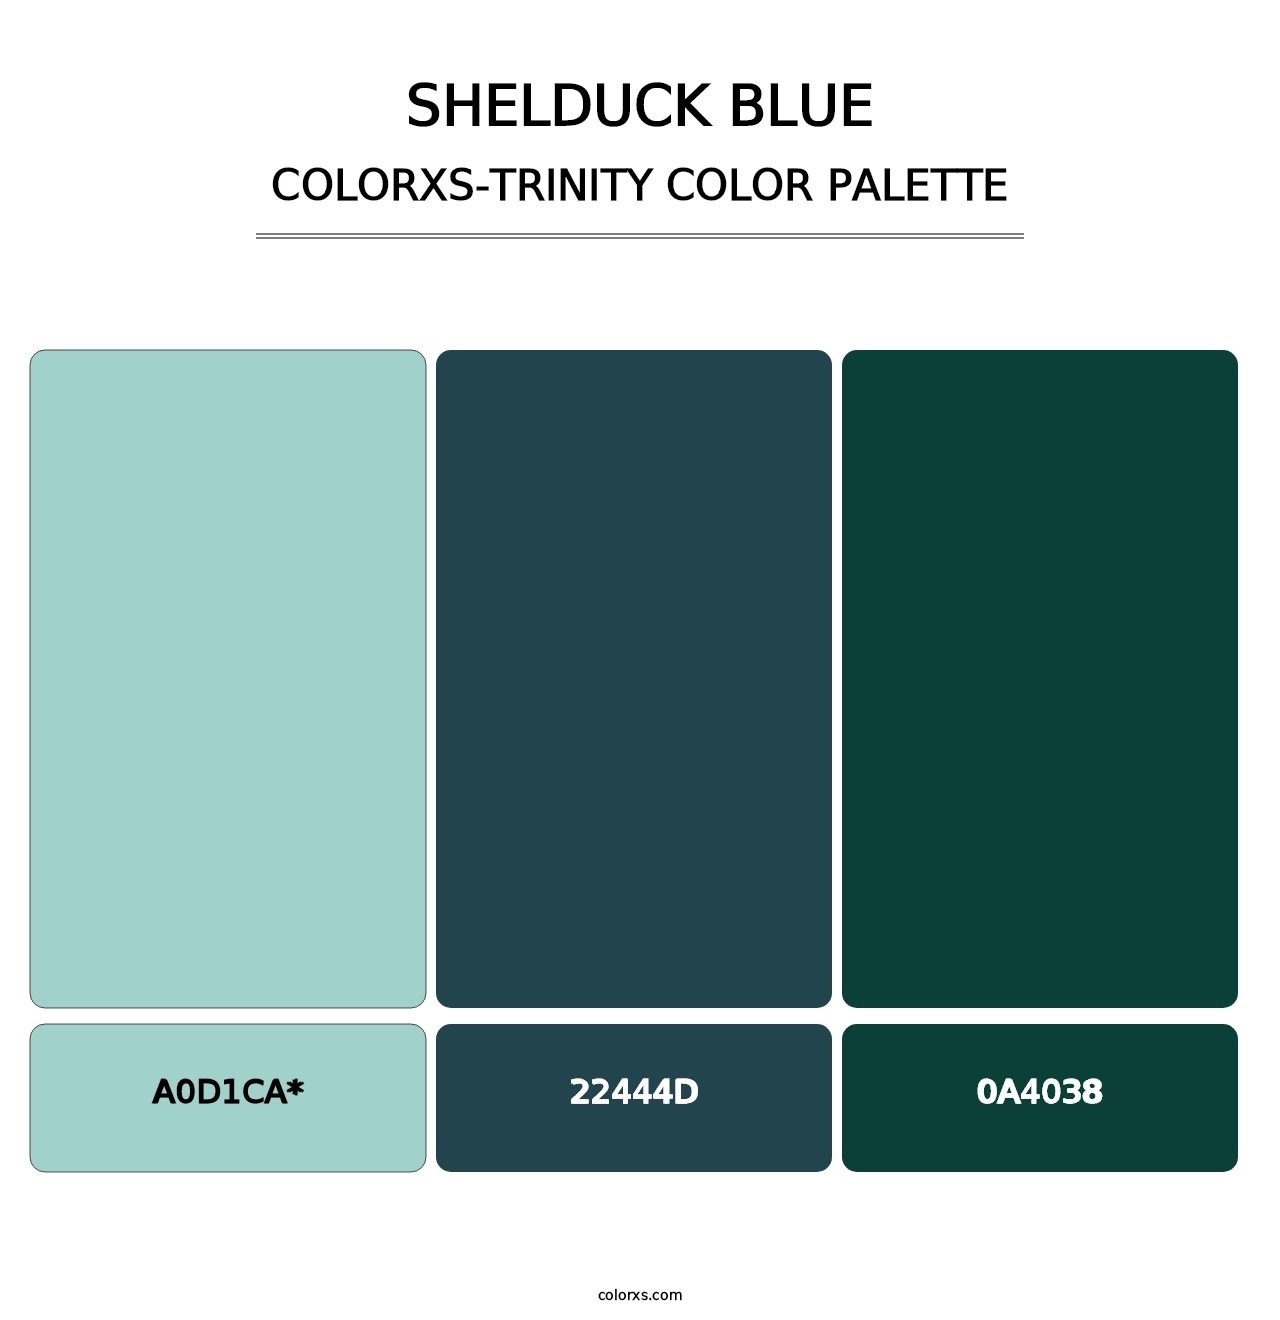 Shelduck Blue - Colorxs Trinity Palette